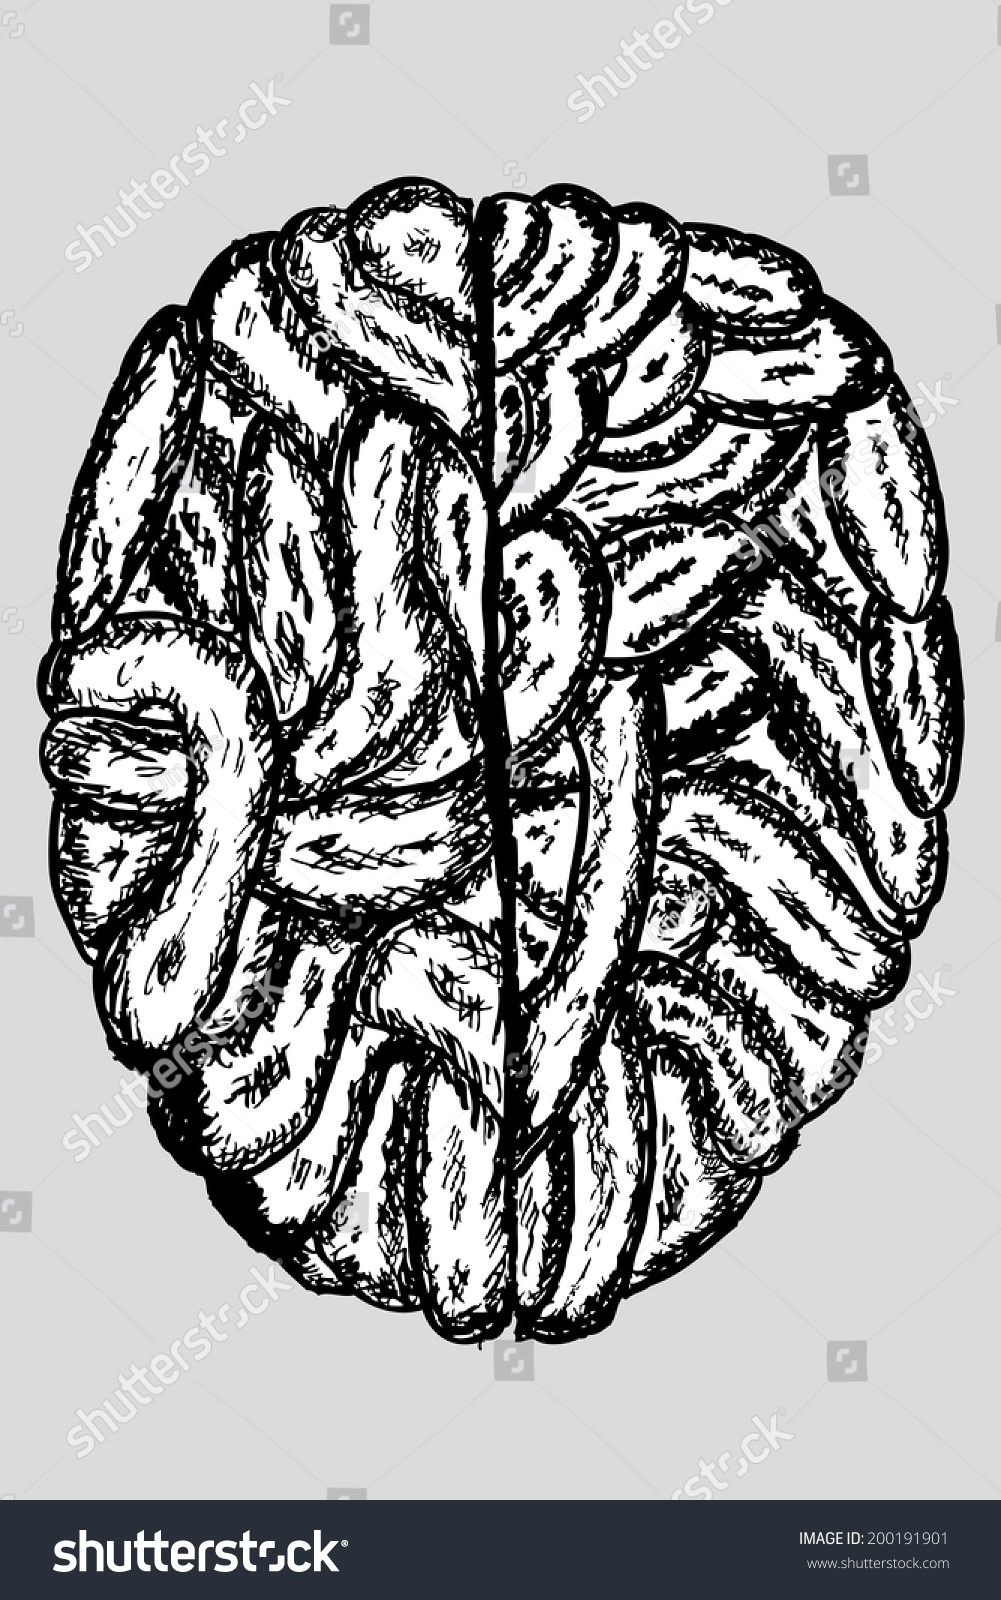 Hand Draw Sketch Brain Stock Vector 200191901 - Shutterstock